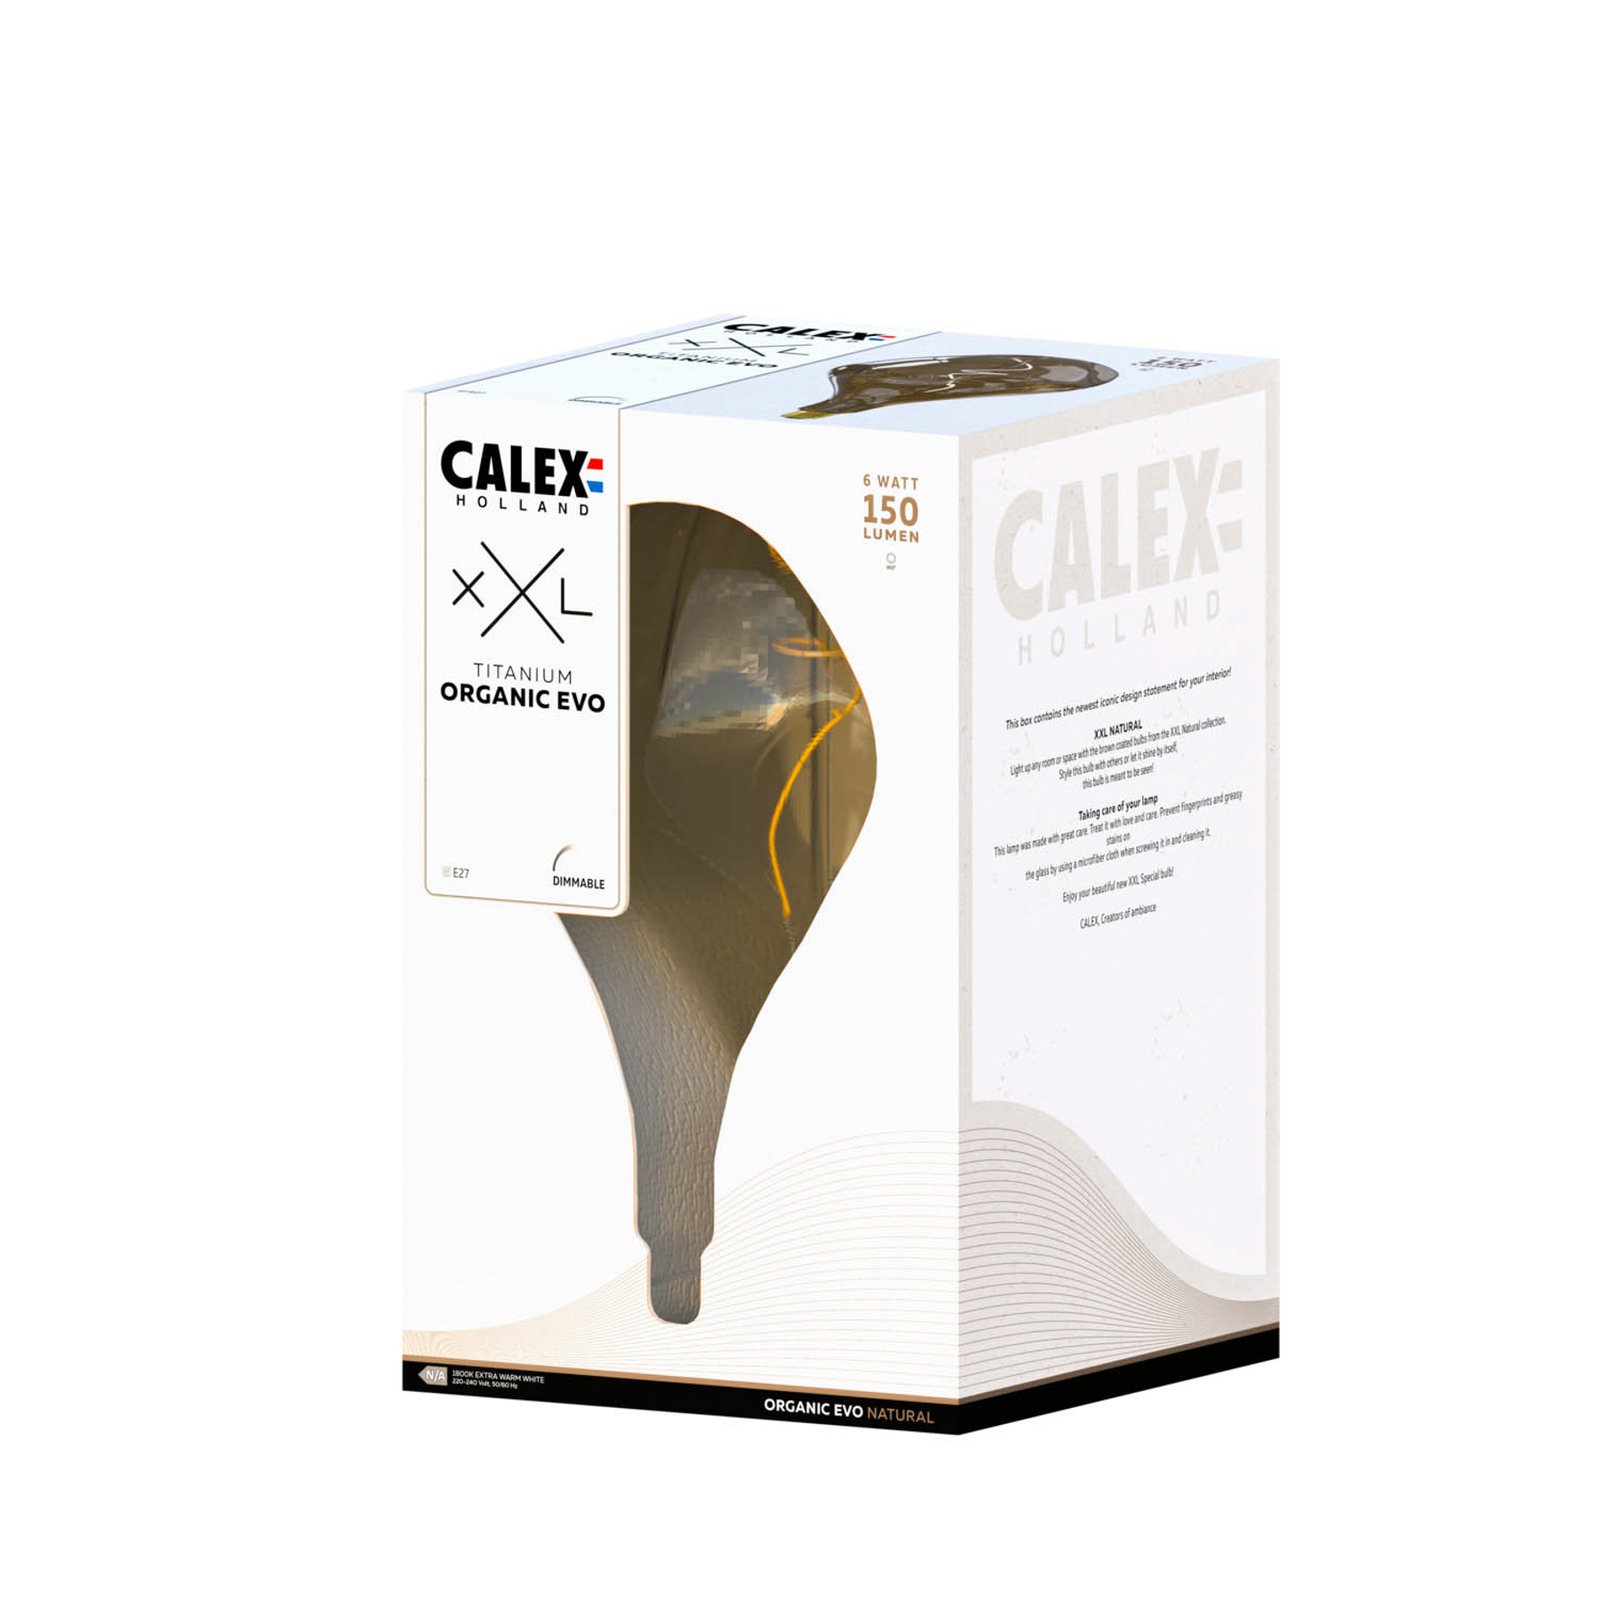 Calex Organic Evo bombilla LED E27 6W dim natural